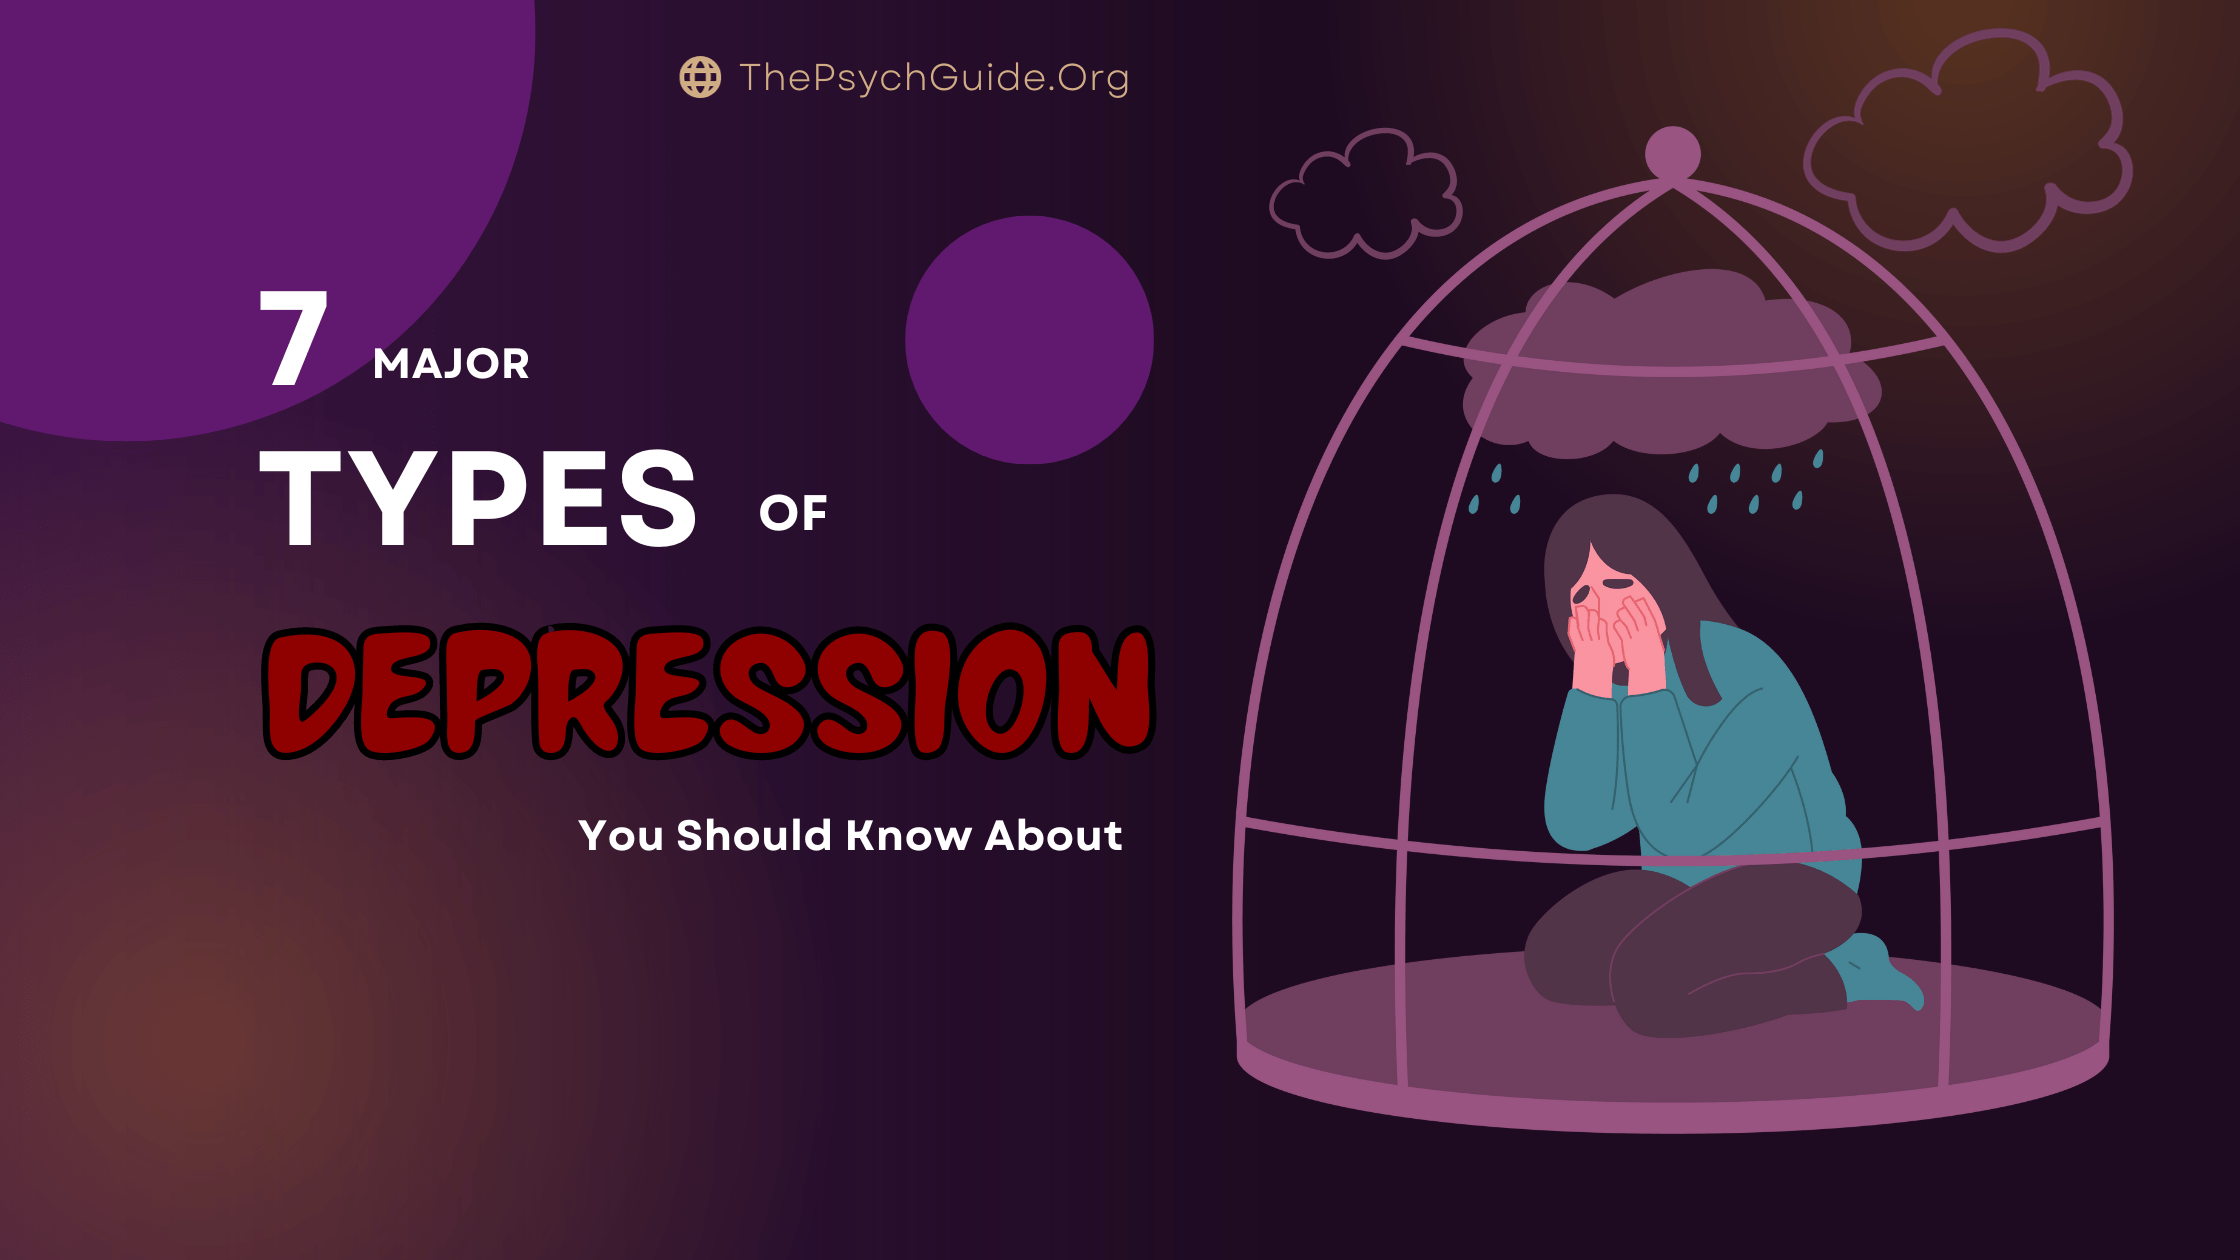 Depression types and symptoms